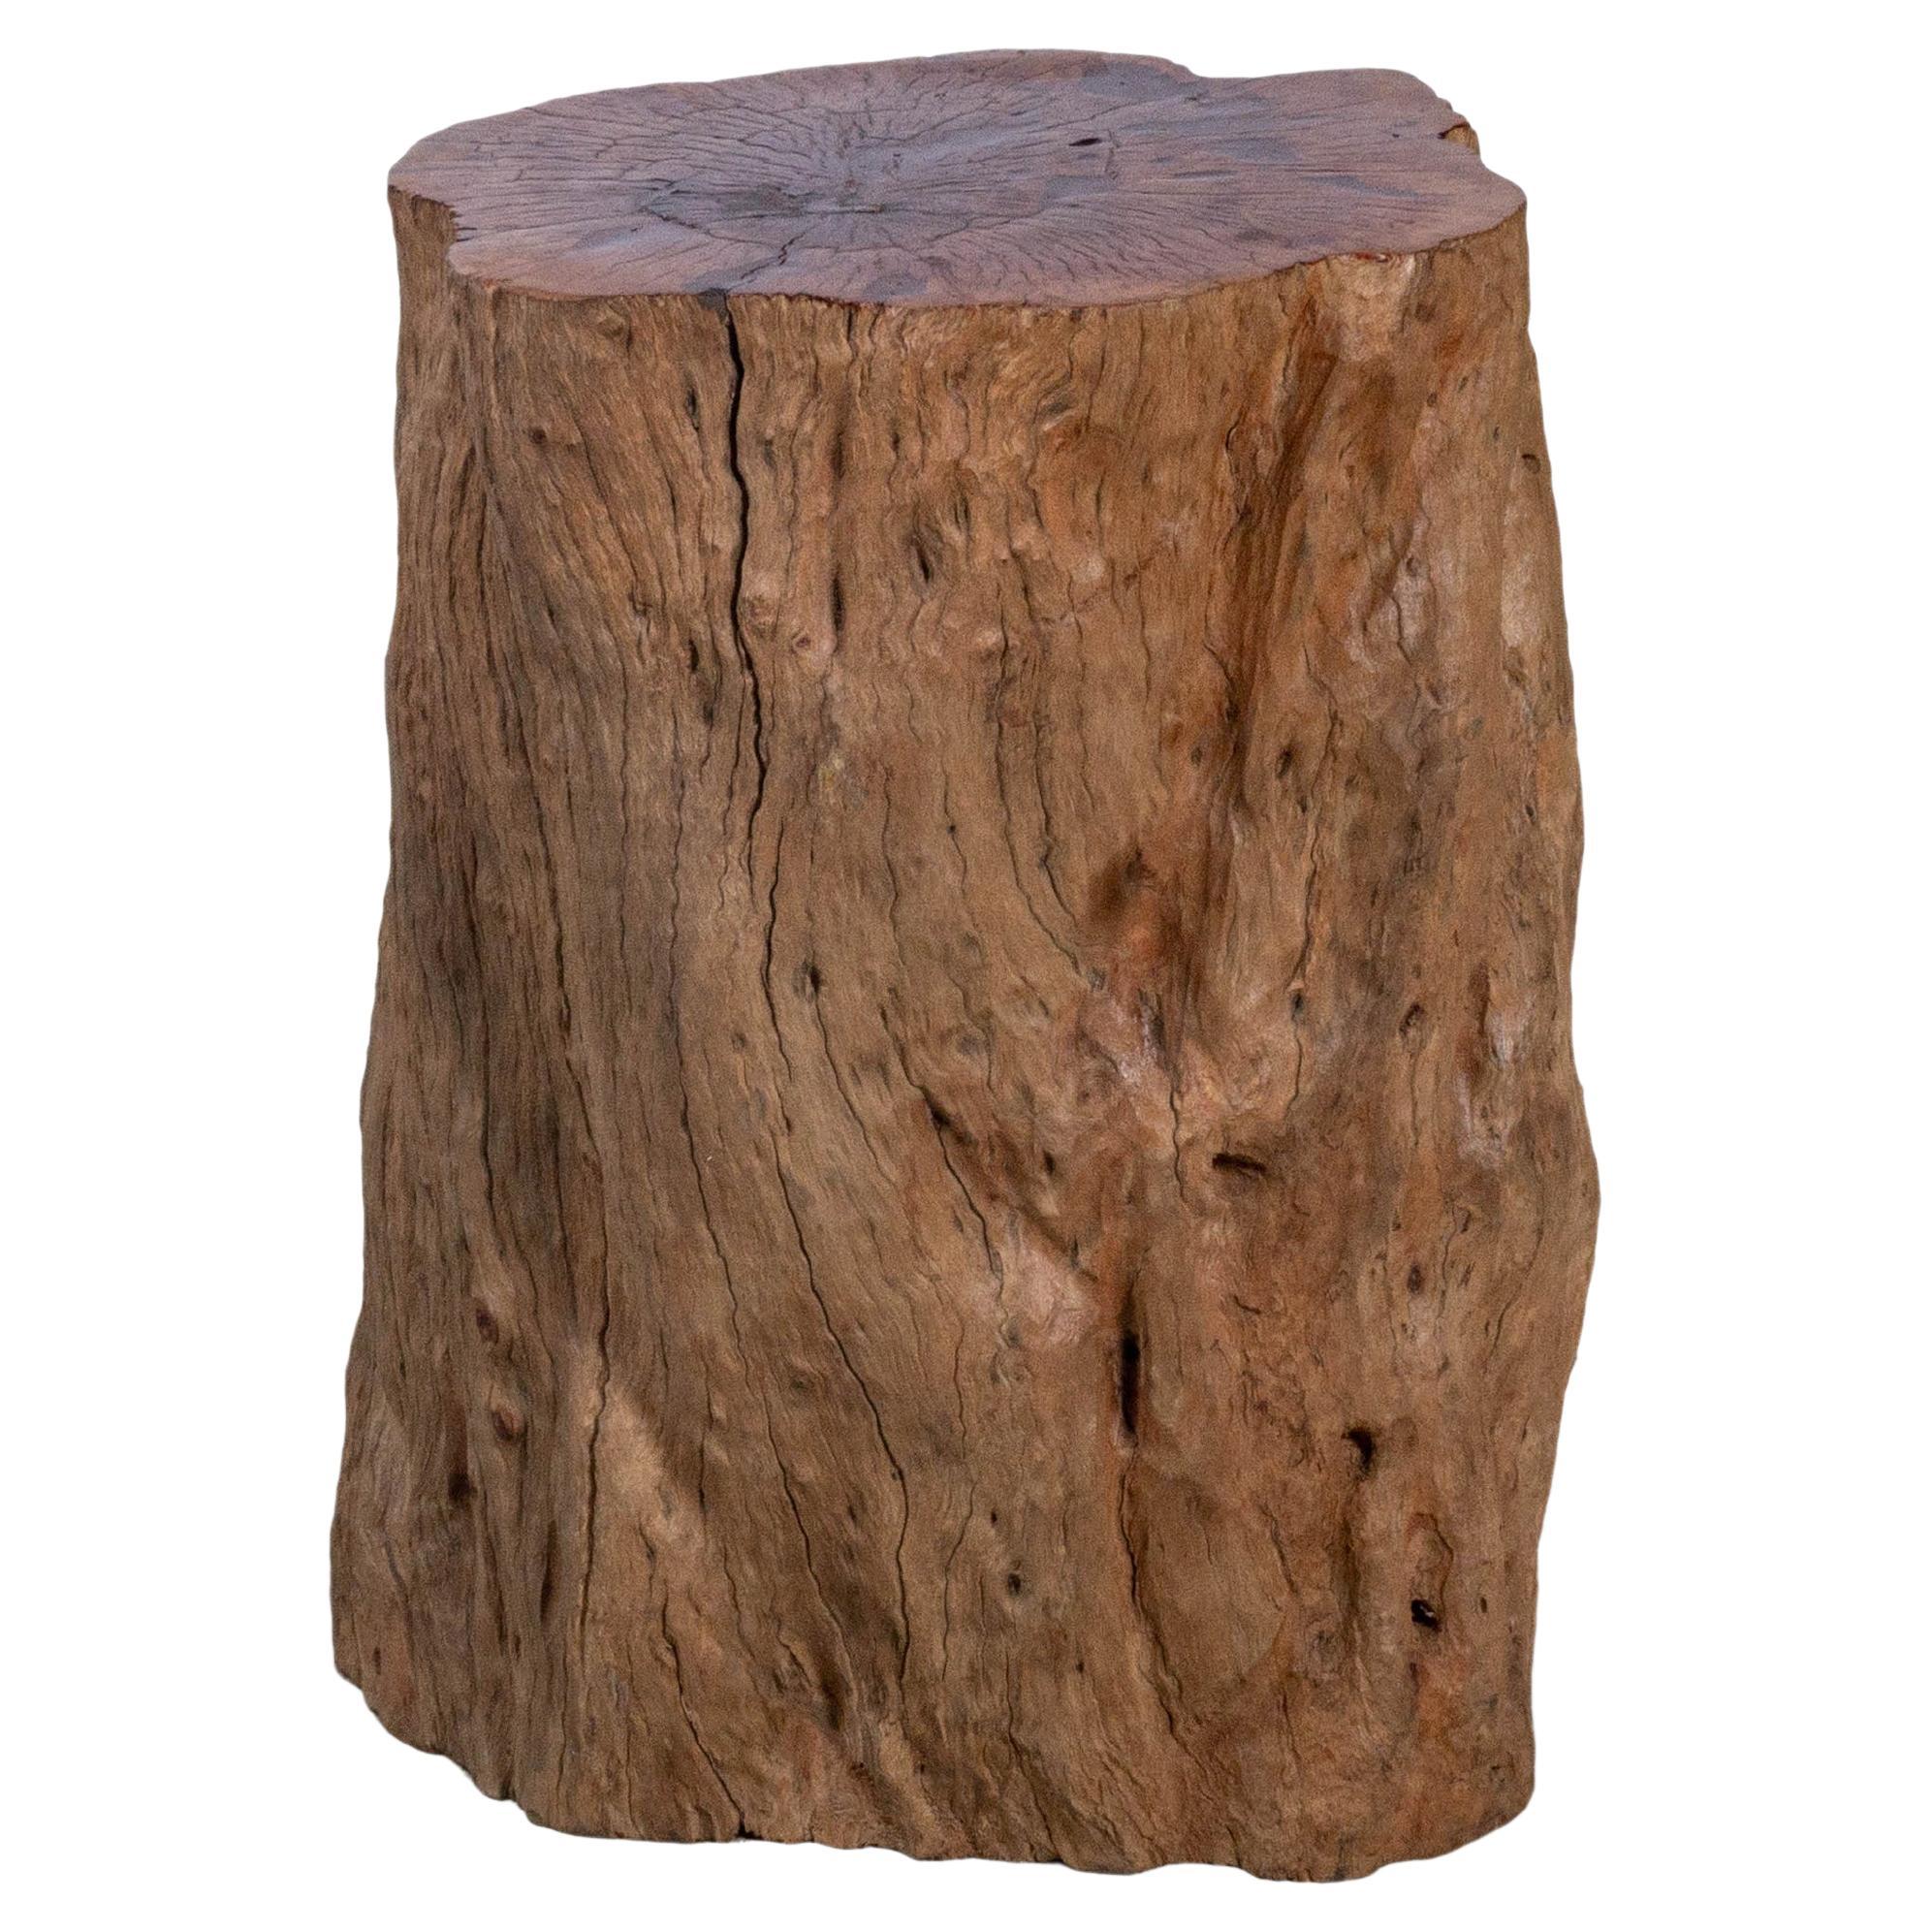 Lychee Holz Organic Form Beistelltisch 